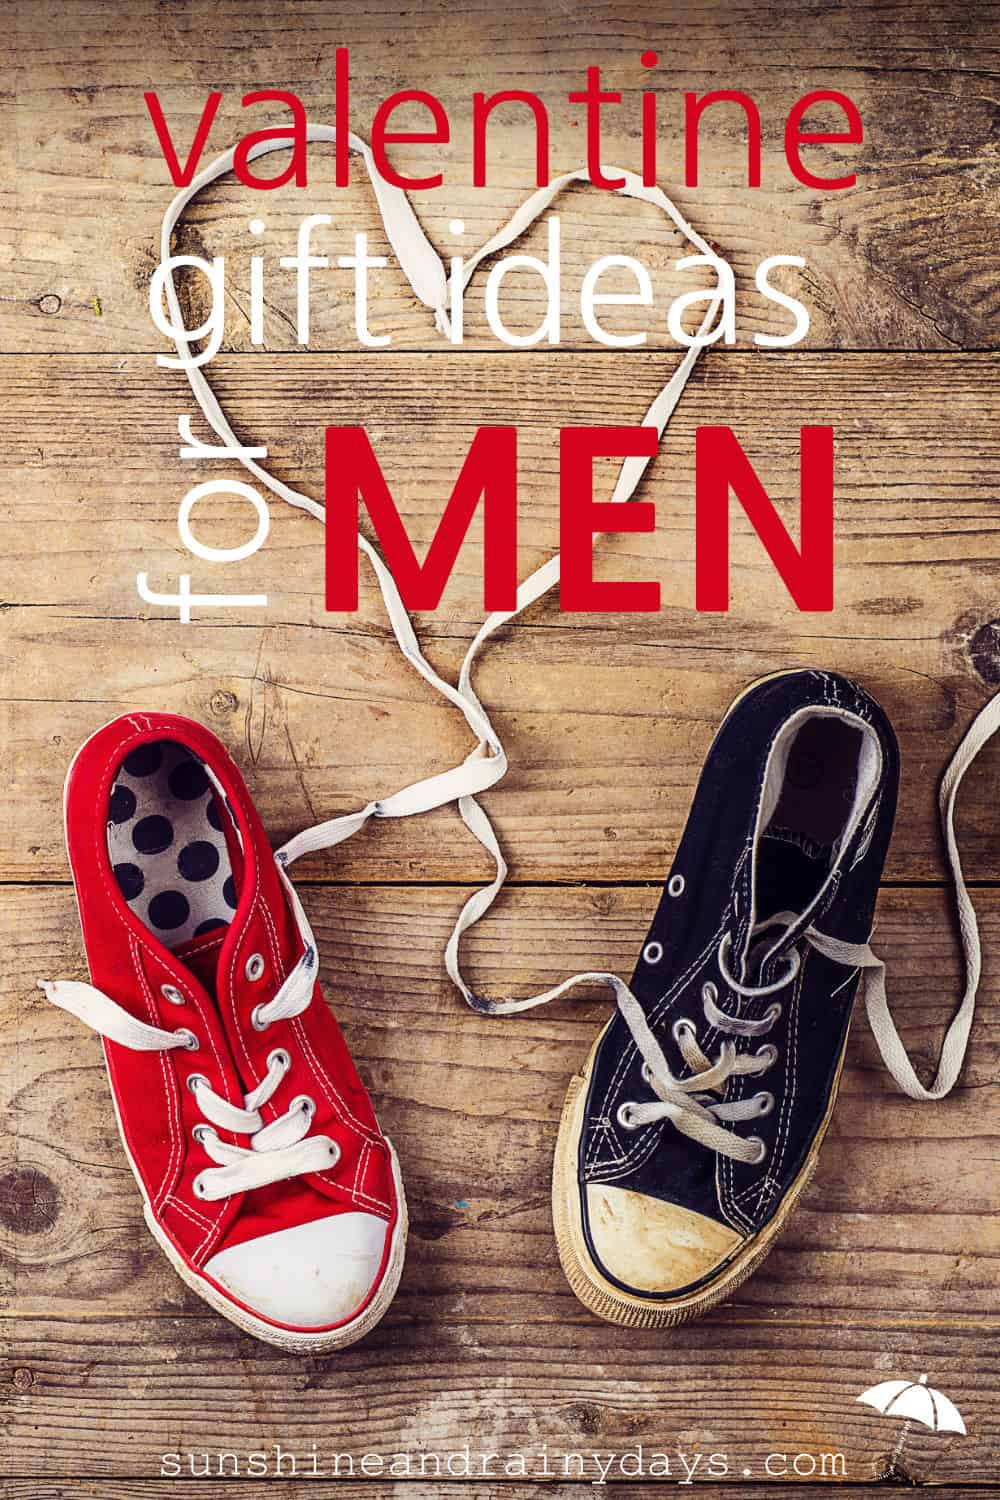 Valentine Gift Ideas For Men - Sunshine and Rainy Days